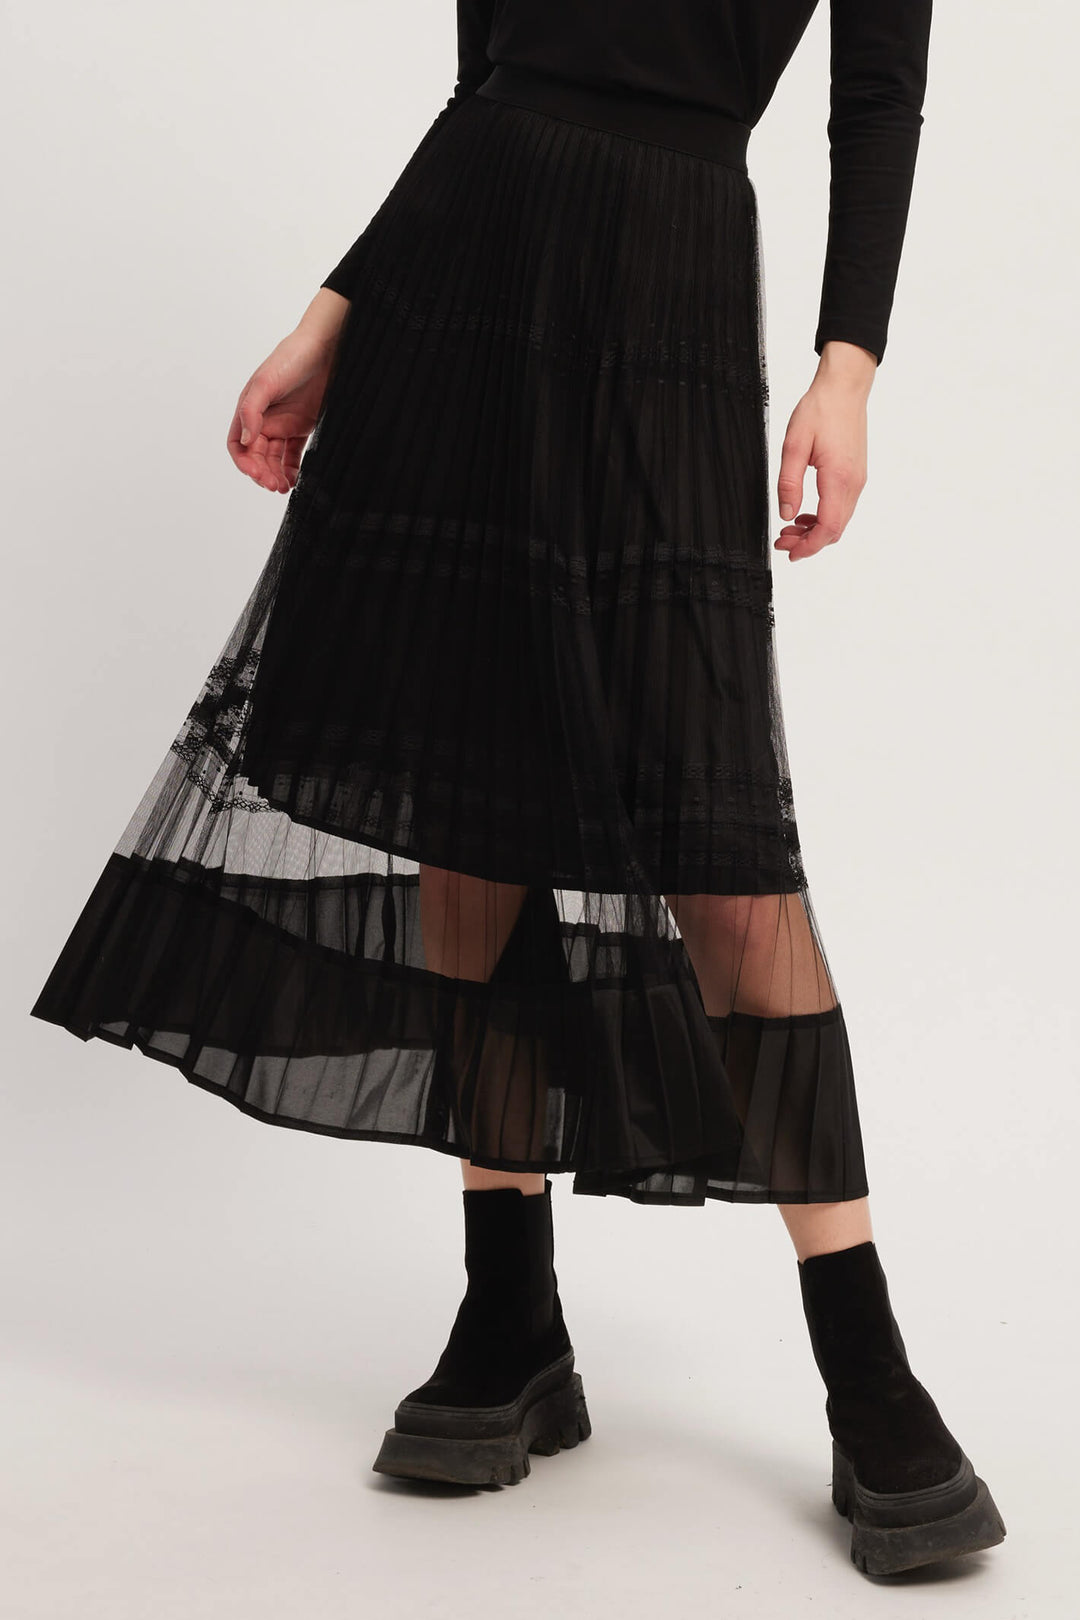 Leo & Ugo KHJ222 Black Mesh Overlay Skirt - Experience Boutique